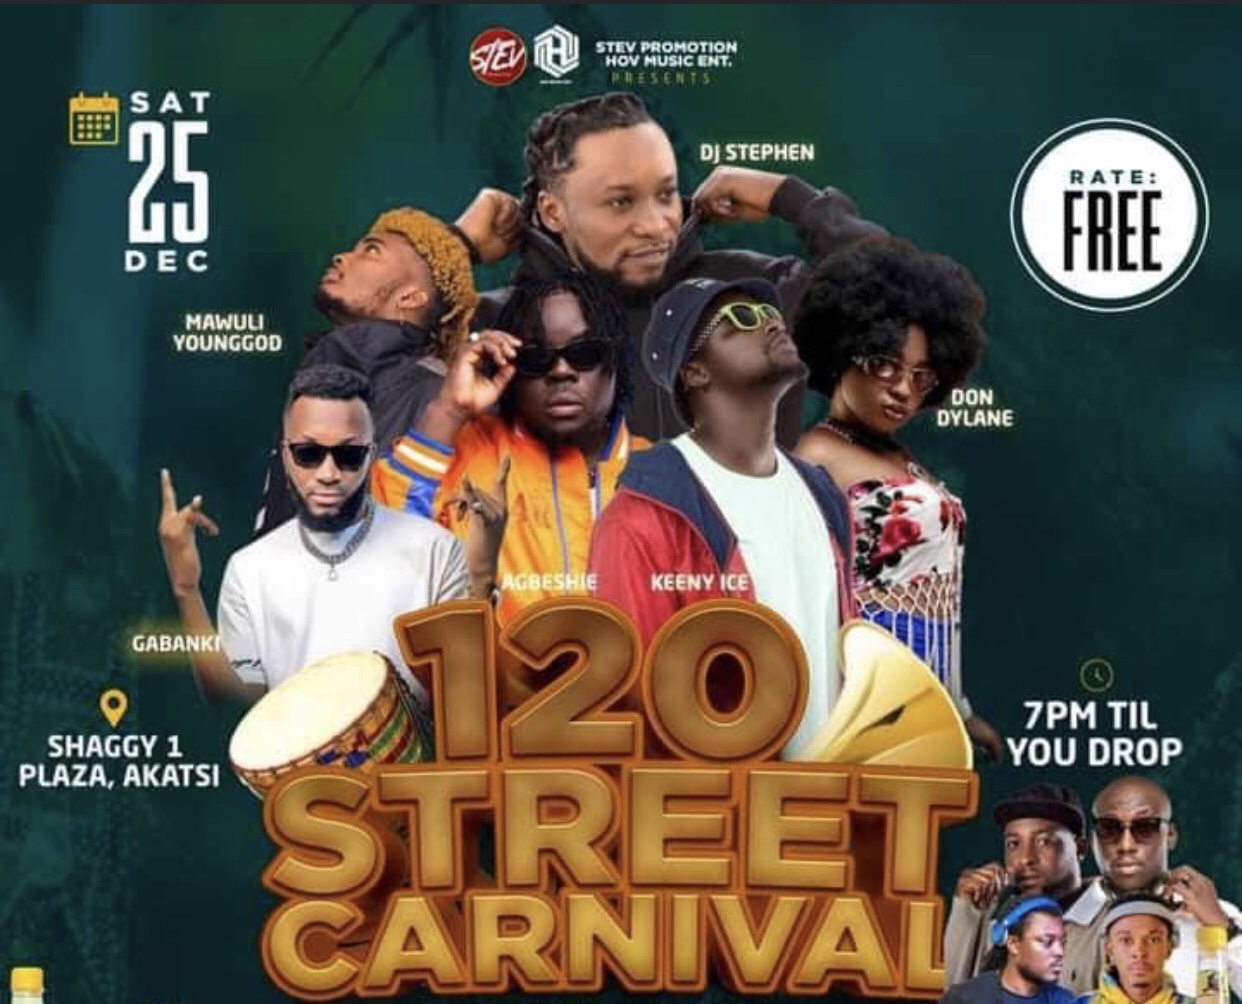 120 Street Carnival